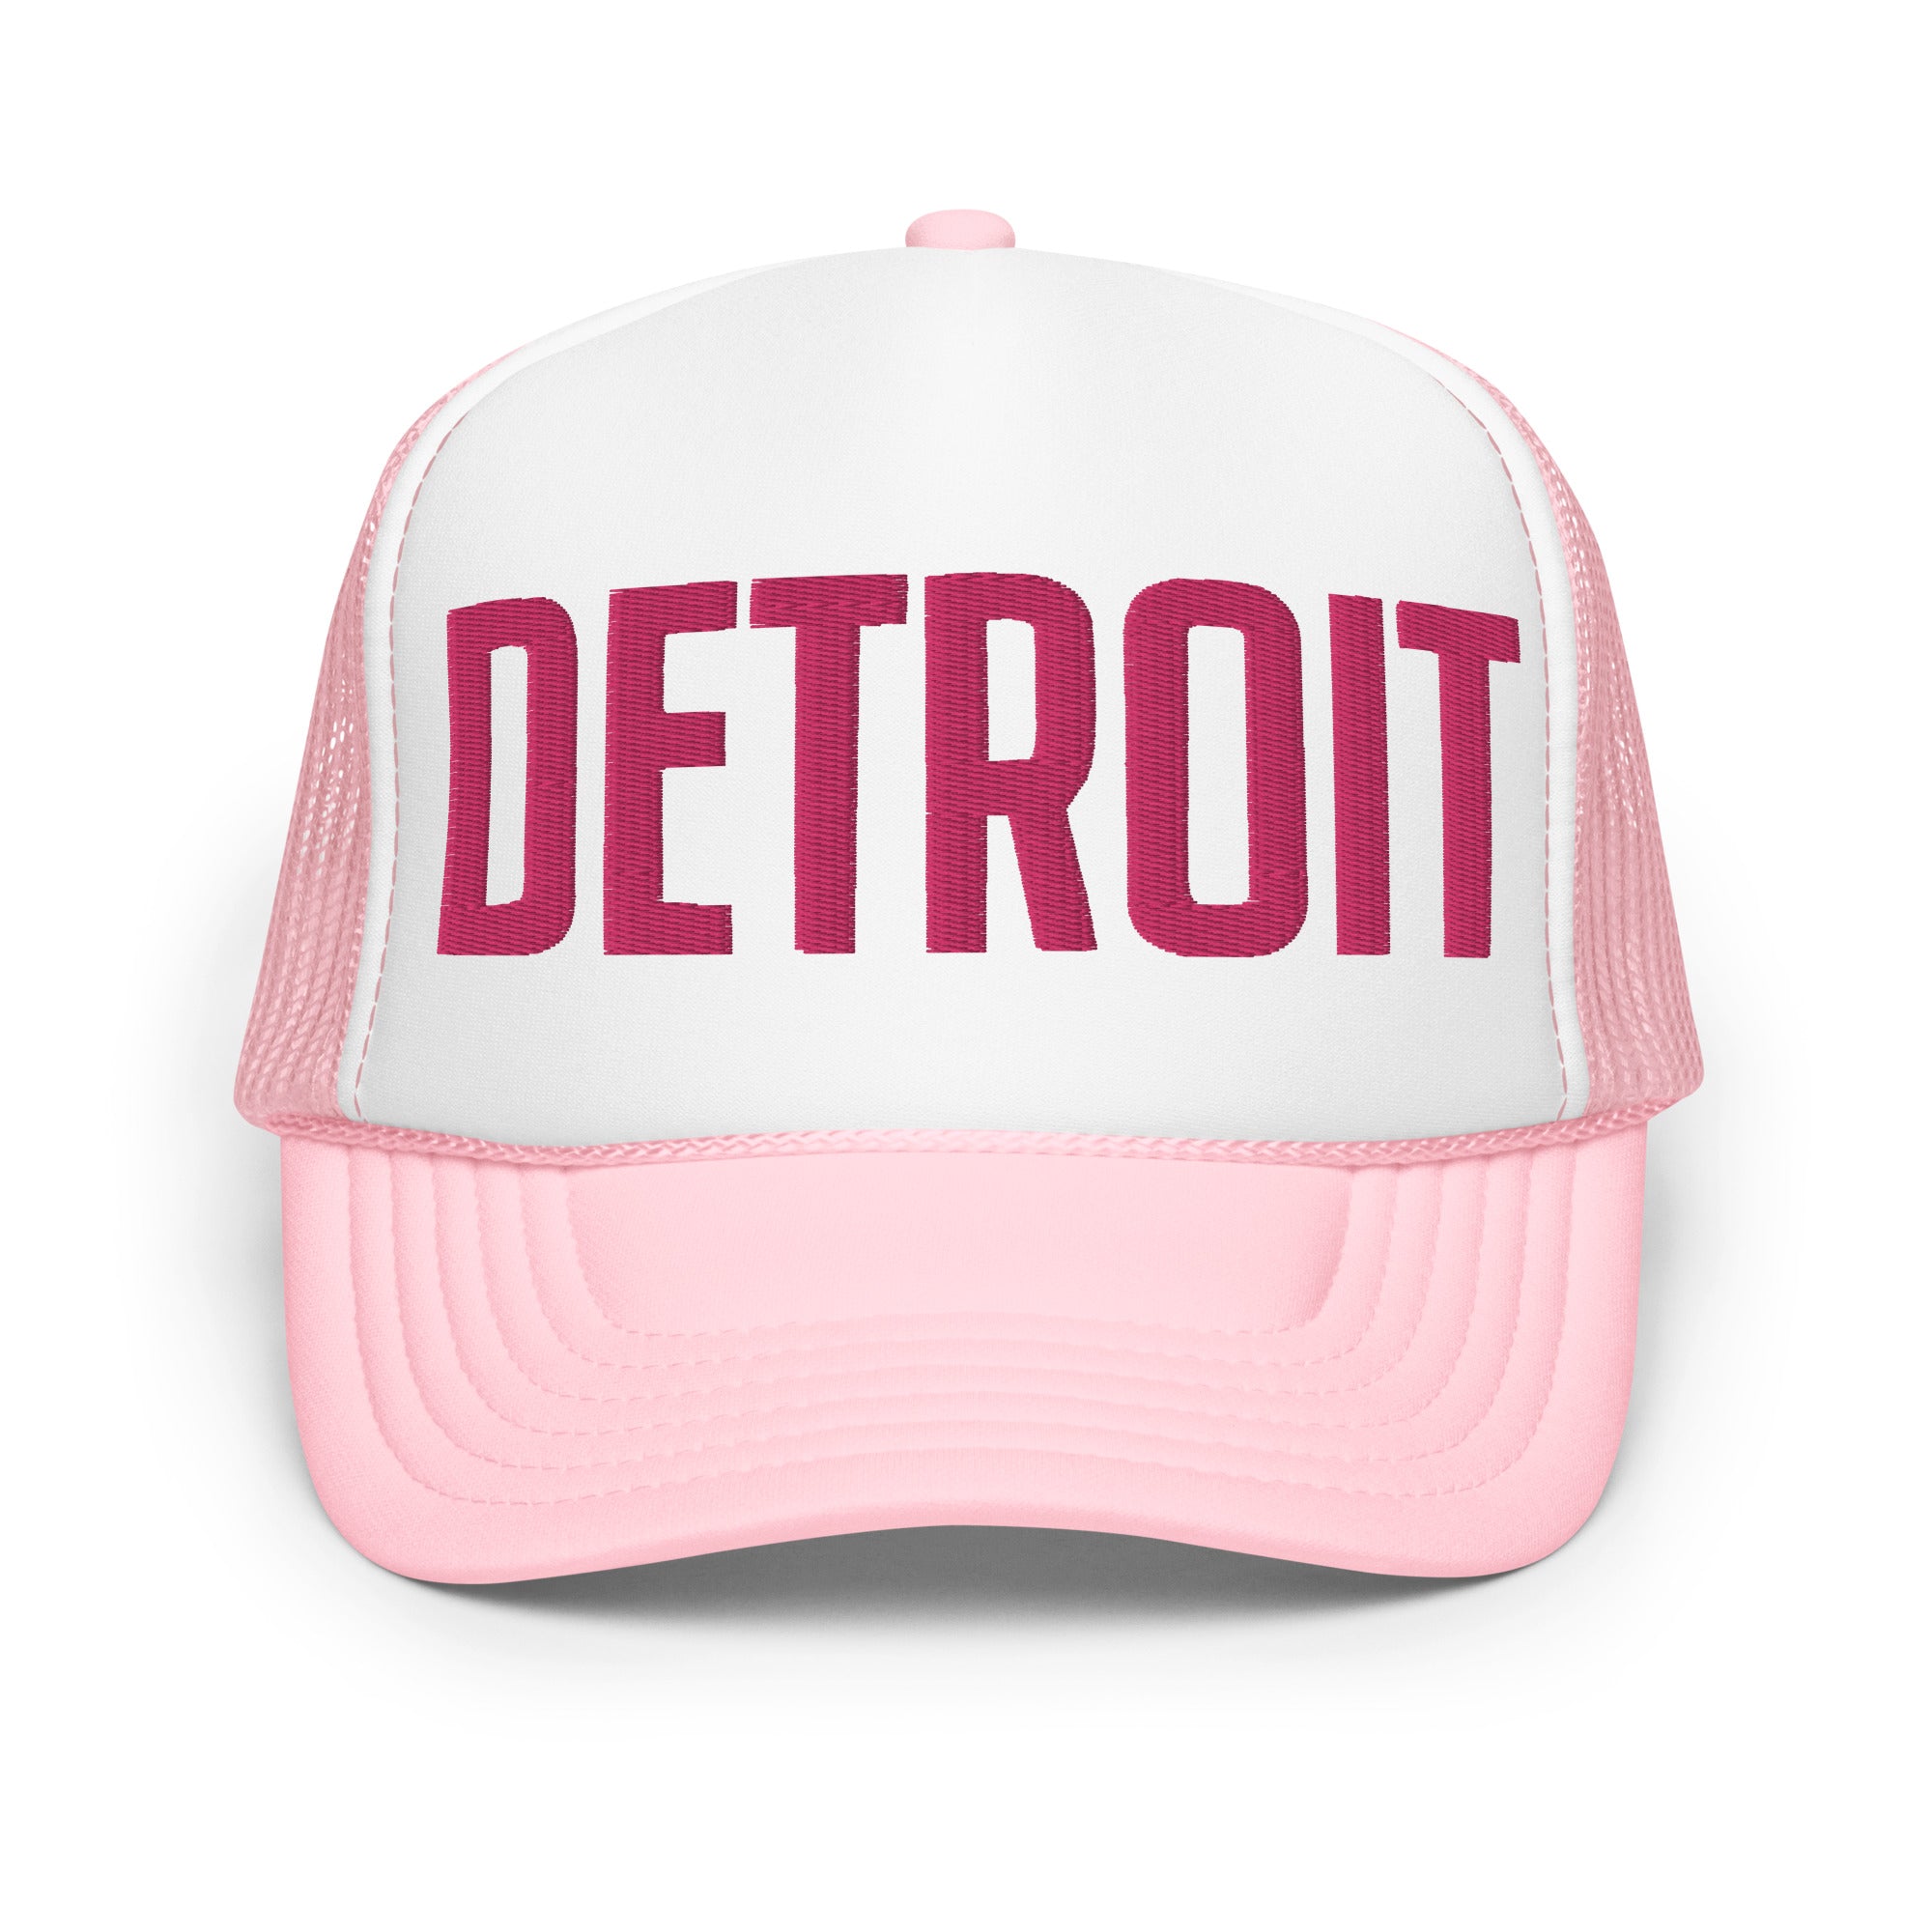 Detroit Foam Trucker Hat - Pink & White - Embroidered  Default Title  